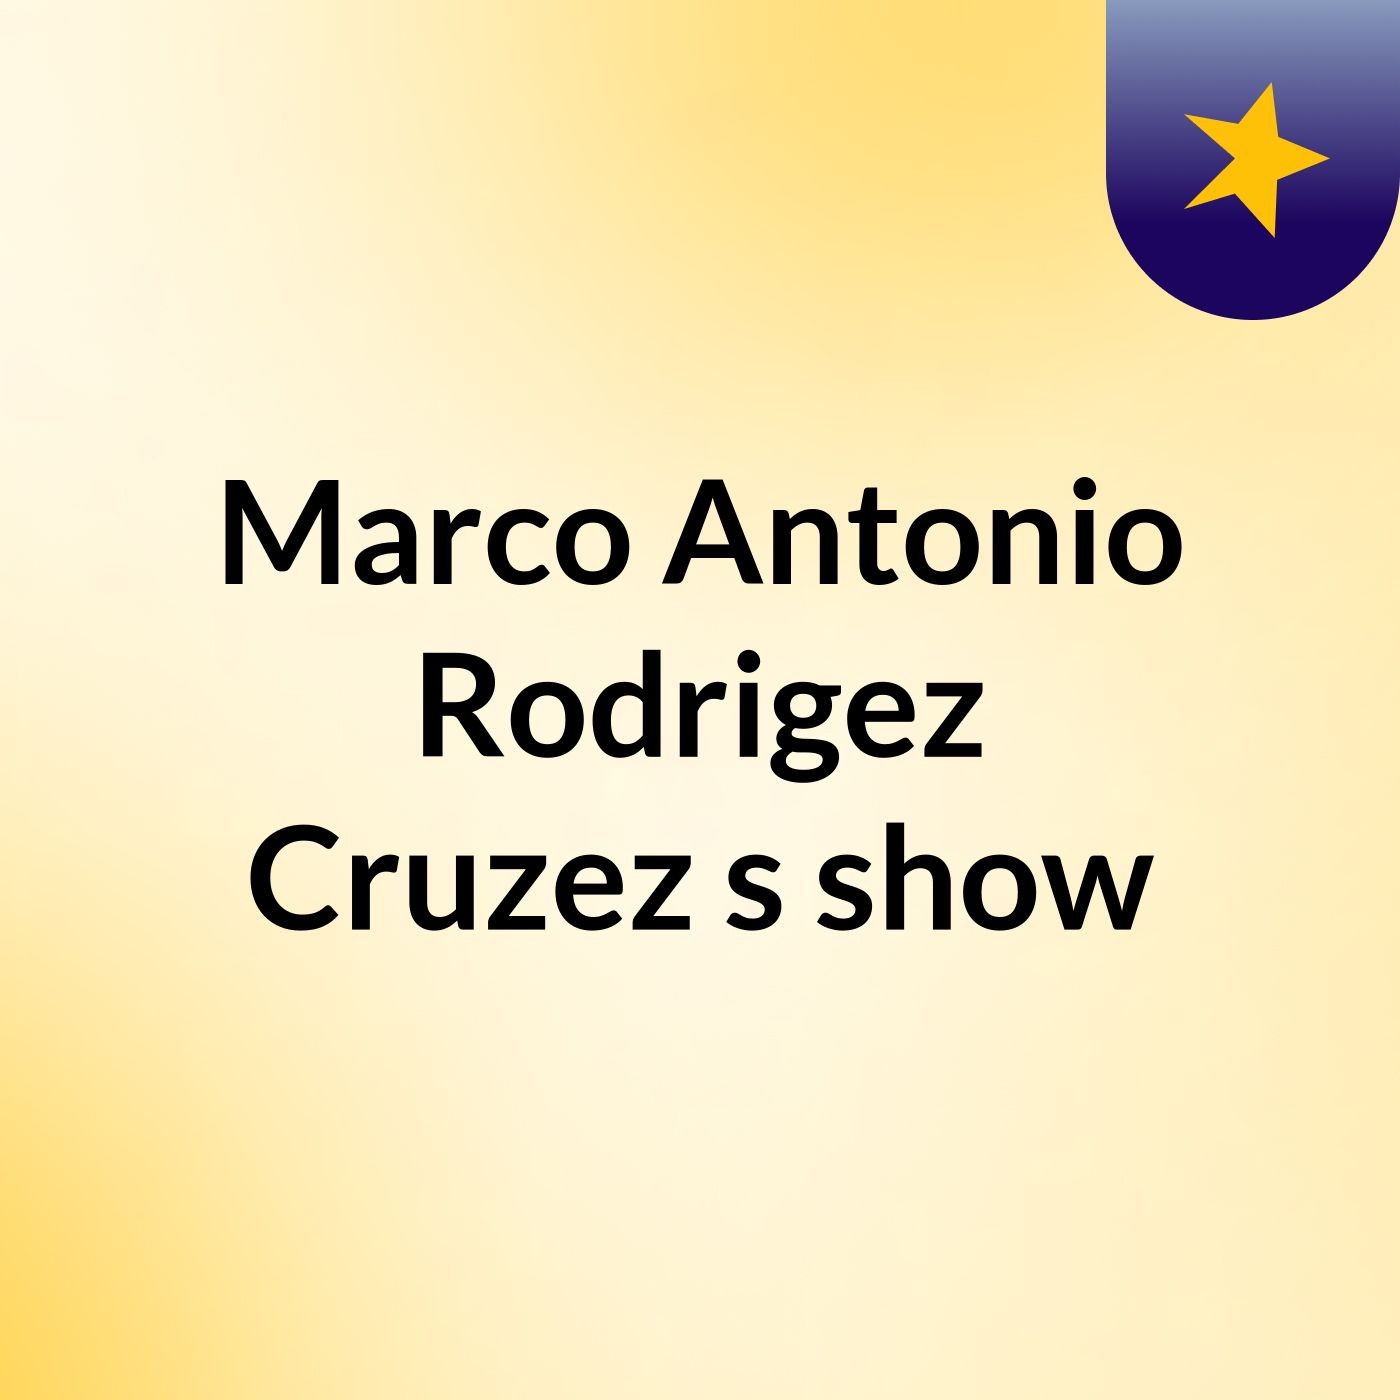 Marco Antonio Rodrigez Cruzez's show